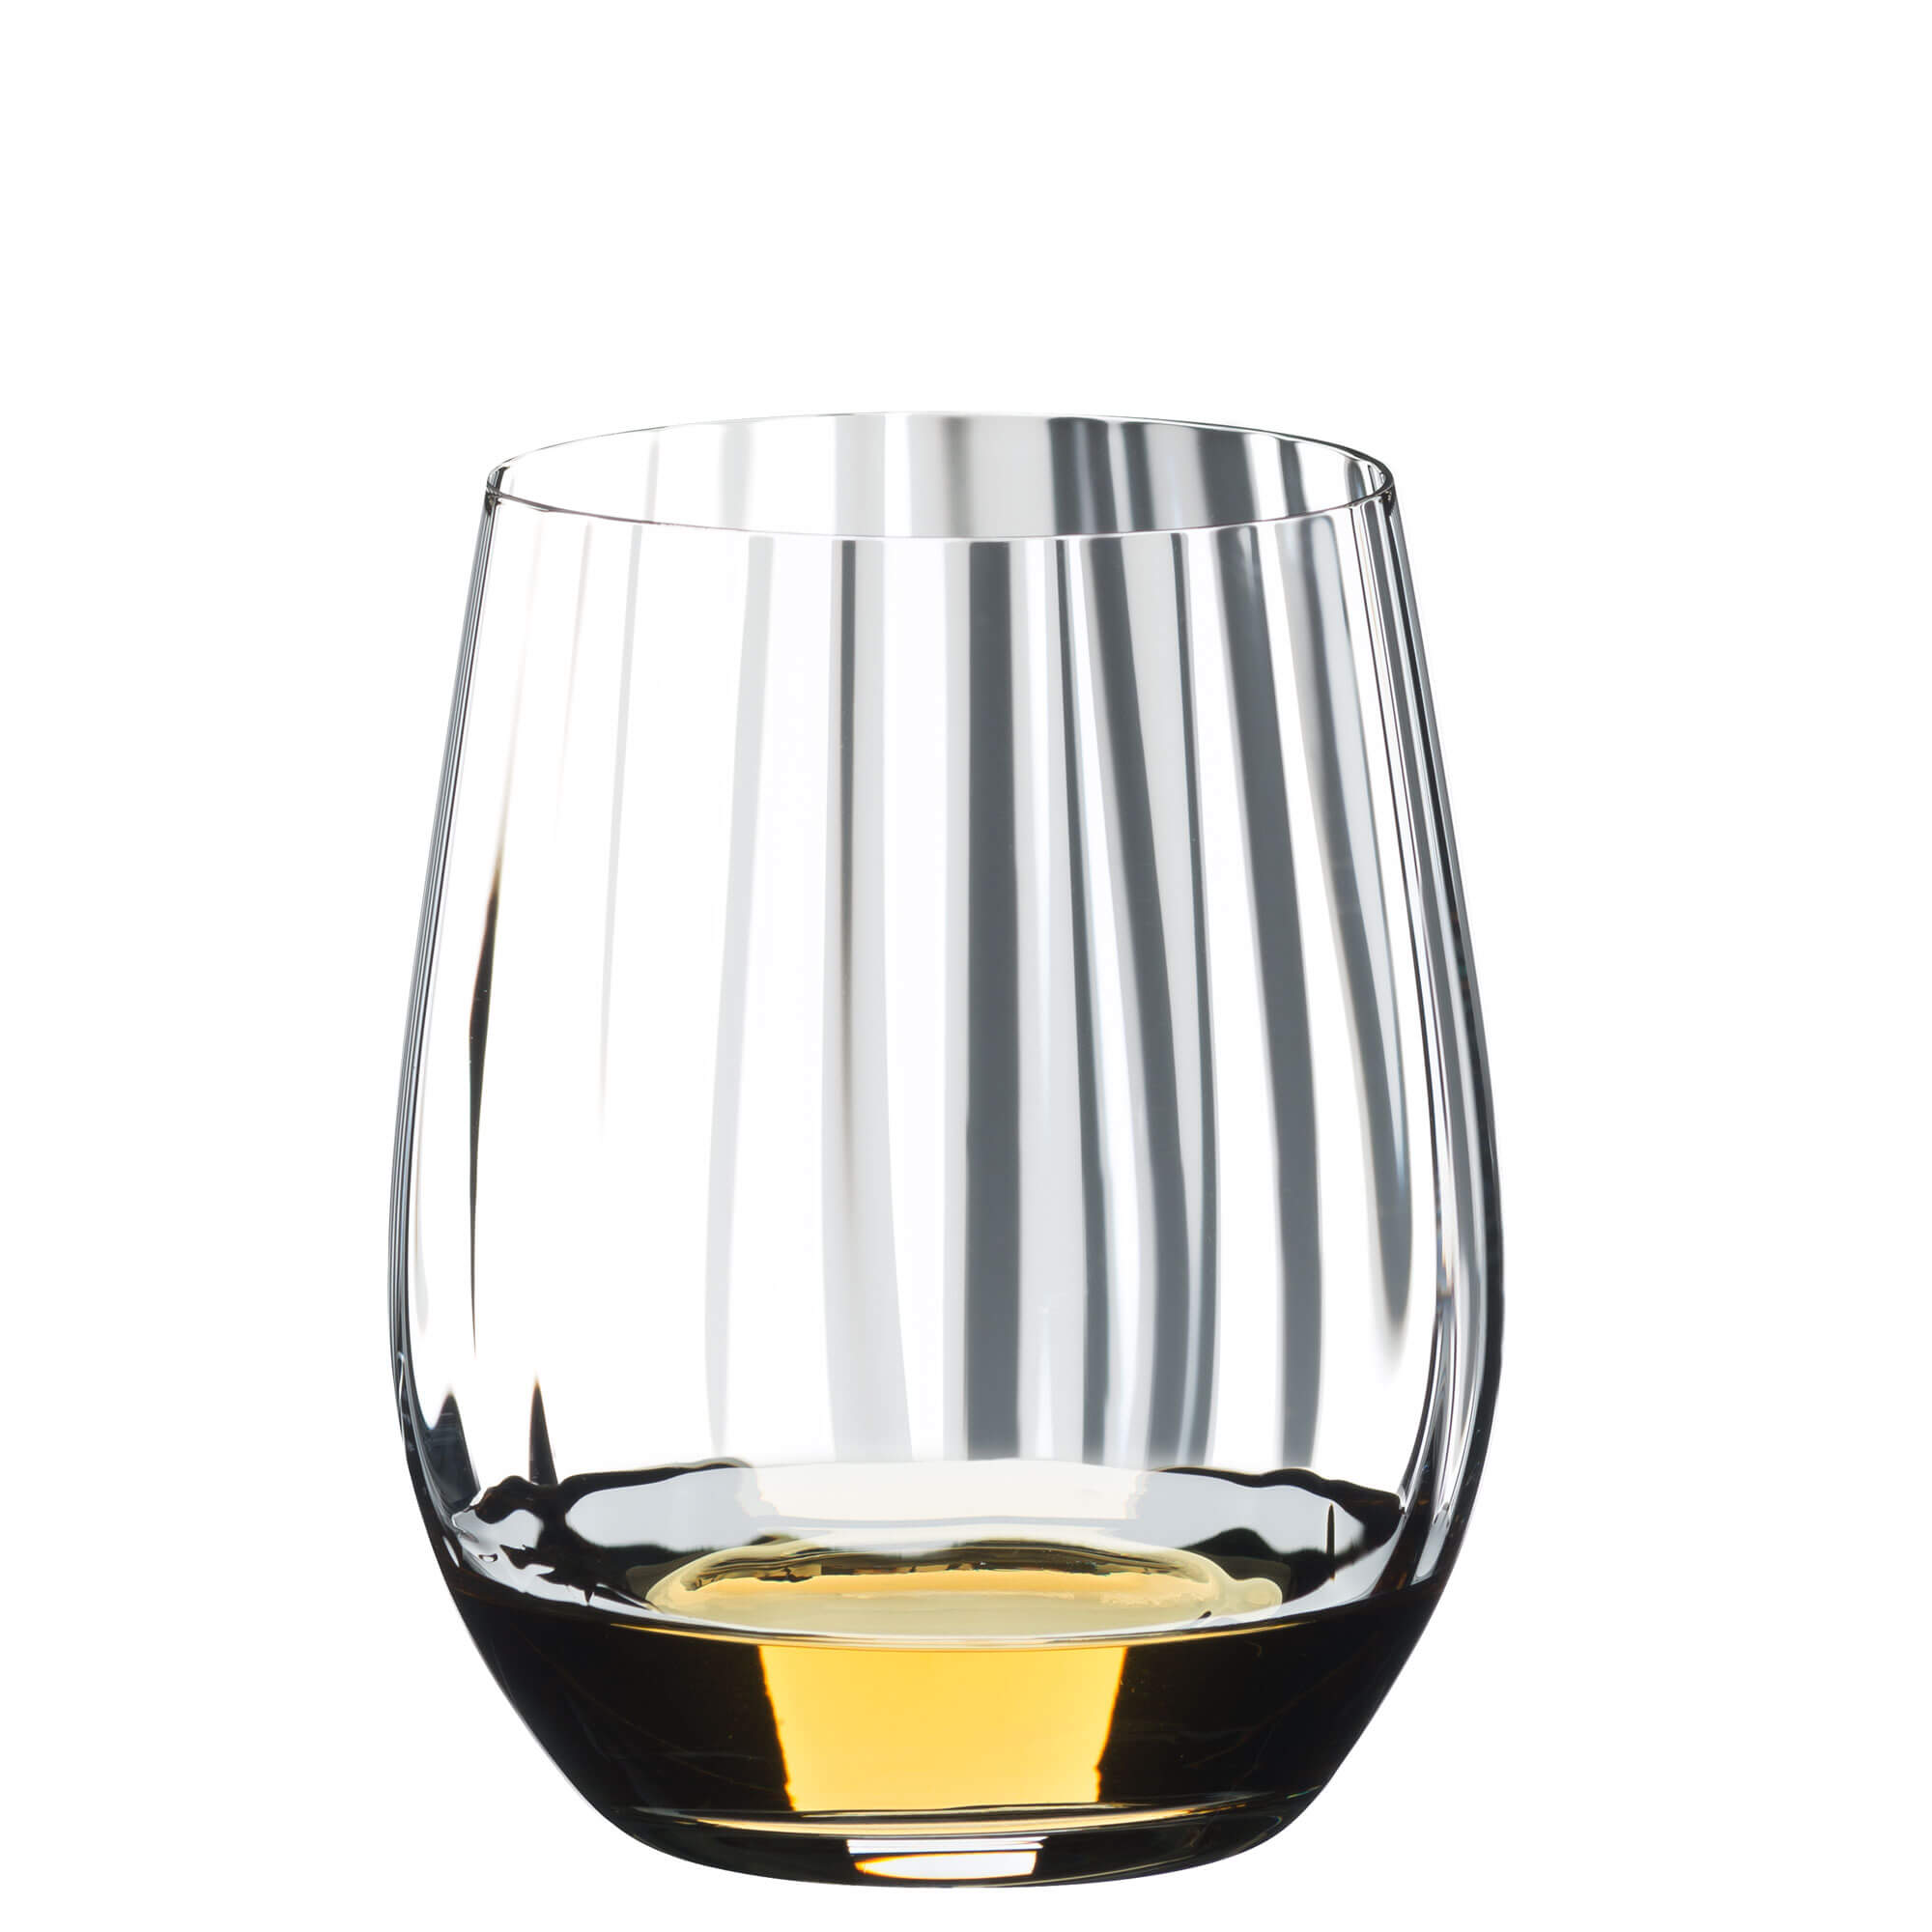 Whiskyglas Optical O, Riedel - 344ml (2 Stk.)